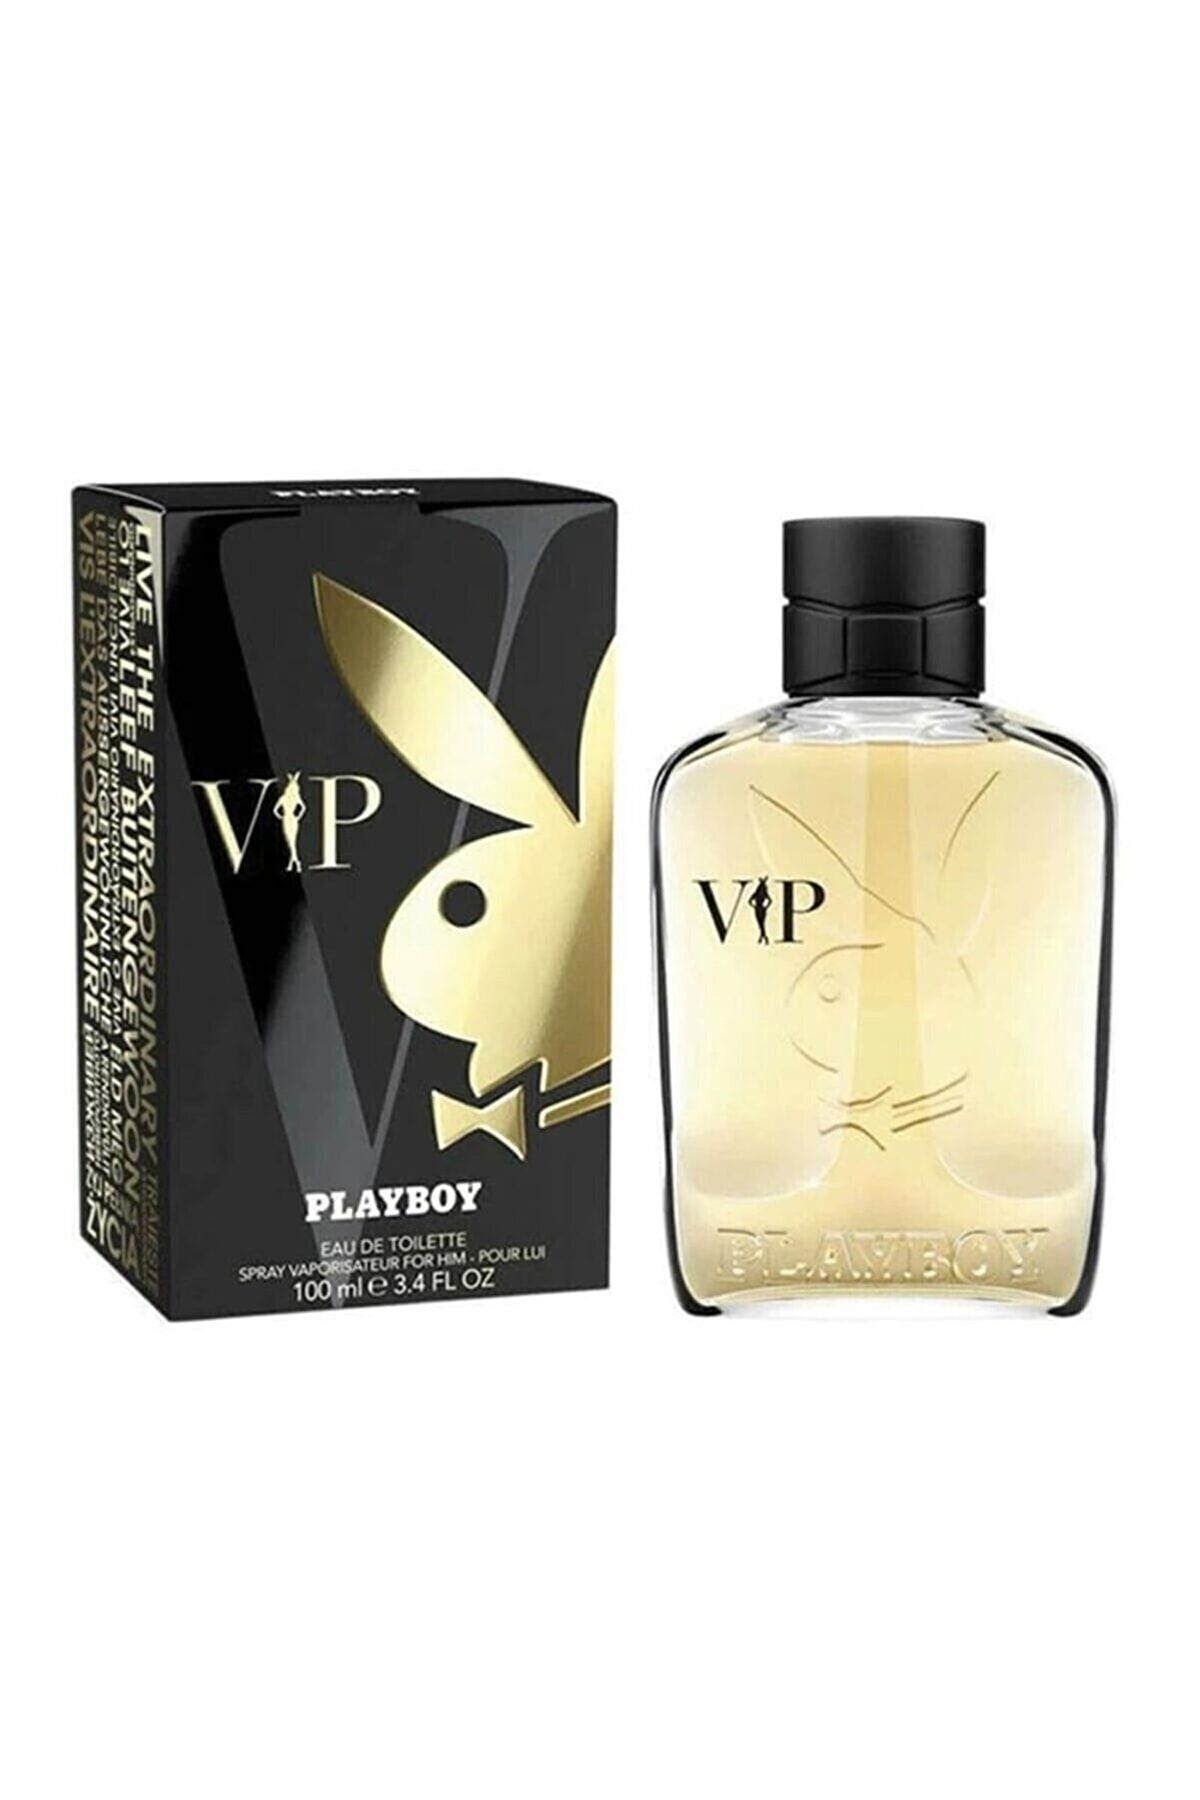 Playboy Vip Lavanta212 Edp 60 ml Erkek Parfüm 4665 4g654gdf546gdd456